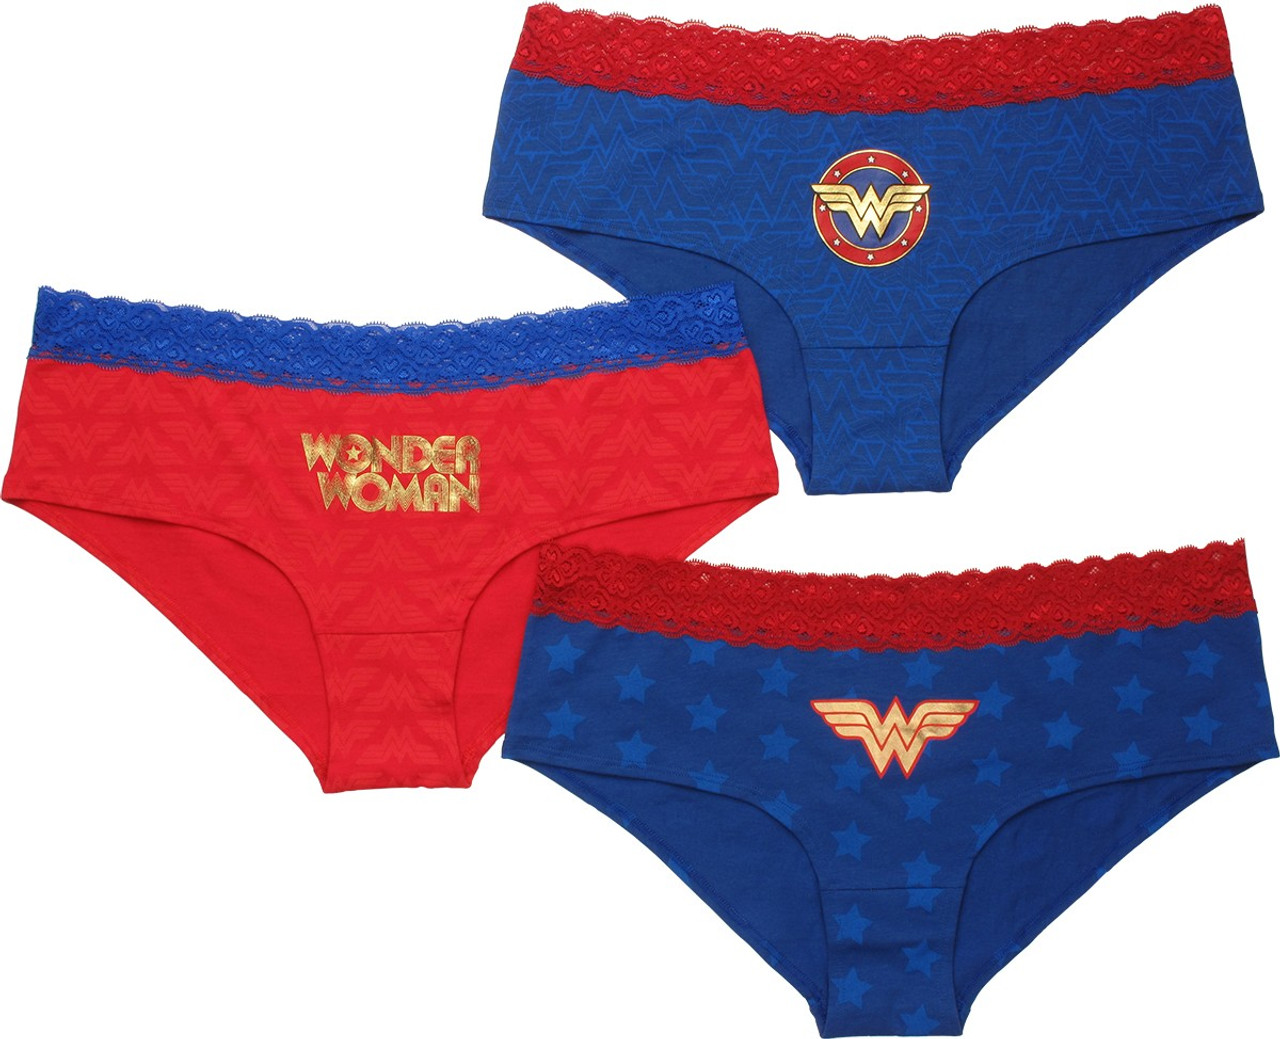 Wonder Woman Panties for Women